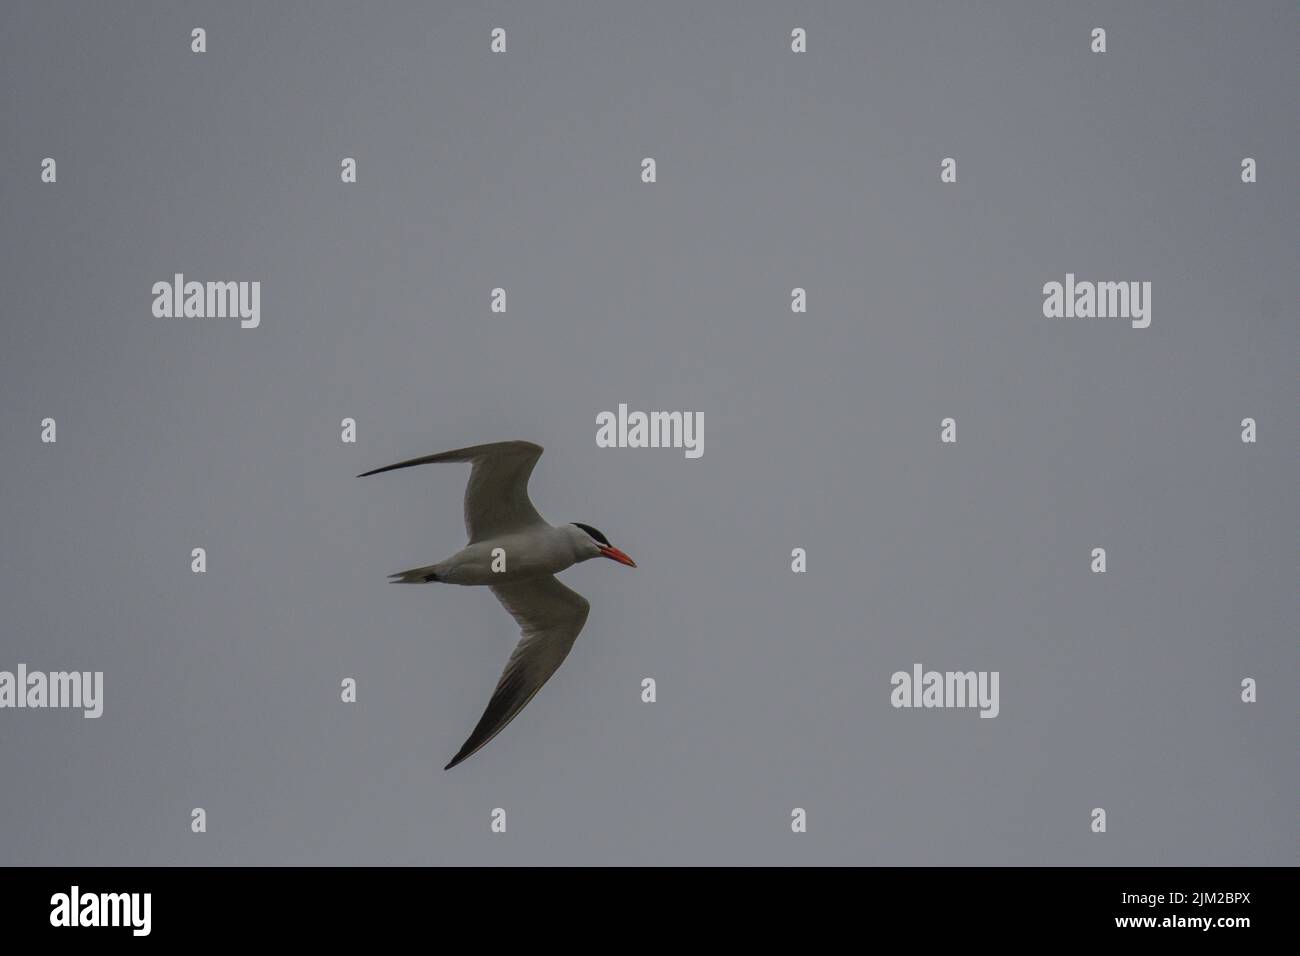 Tern flying across a clear sky Stock Photo